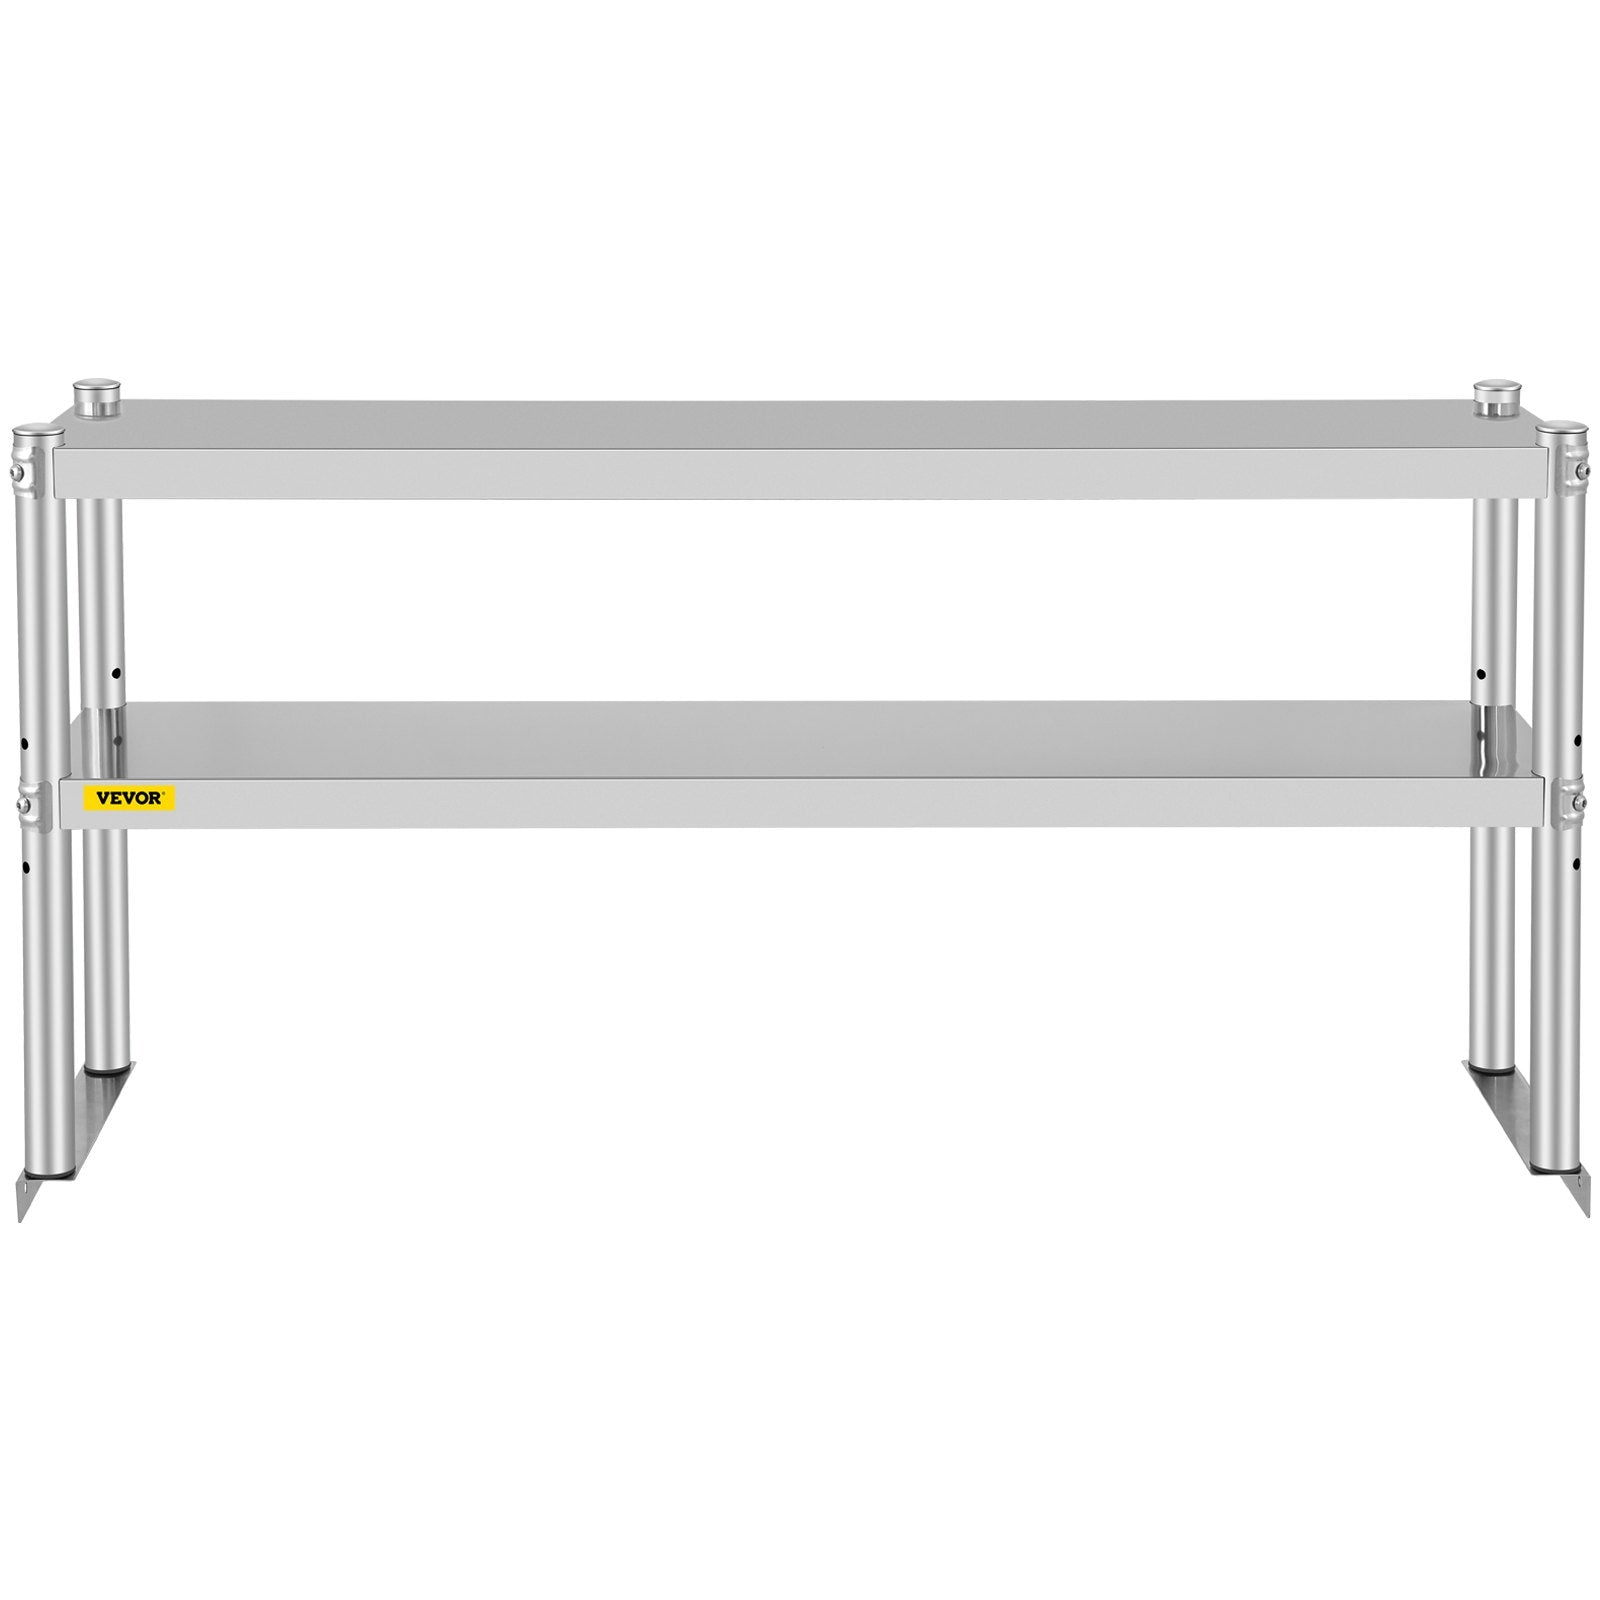 VEVOR Double Overshelf, Double Tier Stainless Steel Overshelf, 48 x 12 x 24 in Double Deck Overshelf, Height Adjustable Overshelf for Prep & Work Table in Kitchen, Restaurant-8